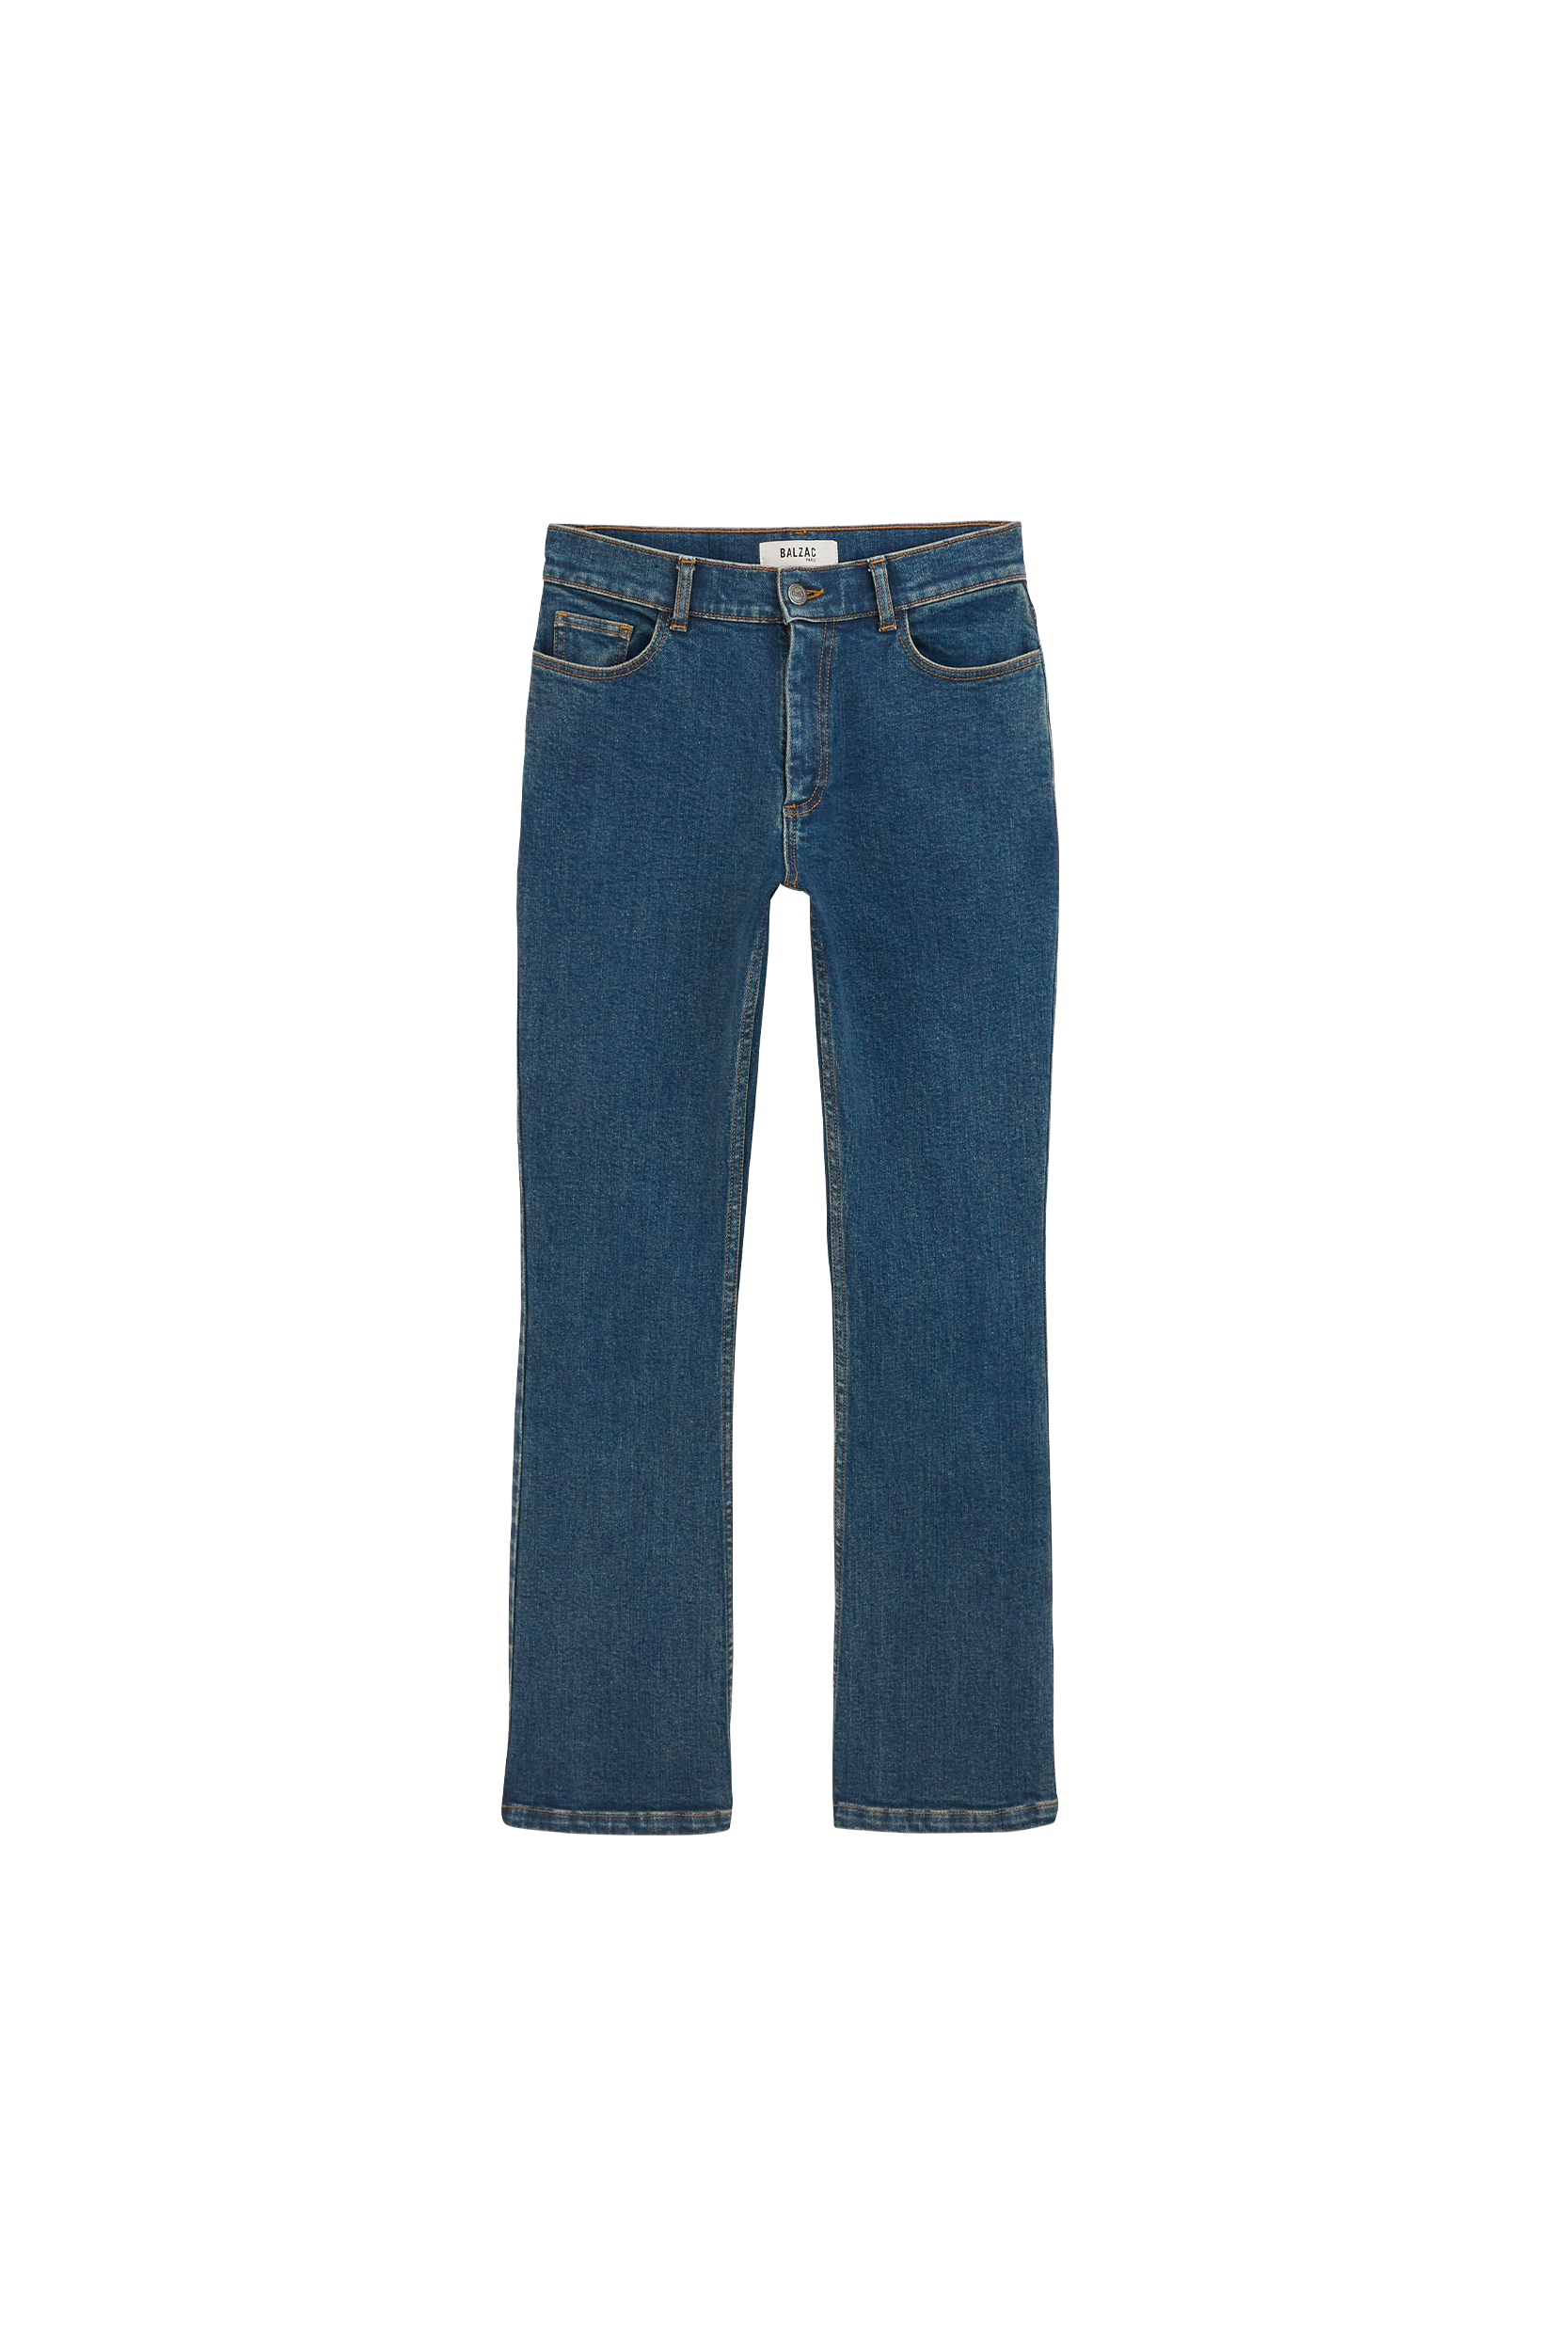 Julius boot-cut jeans in lagoon blue